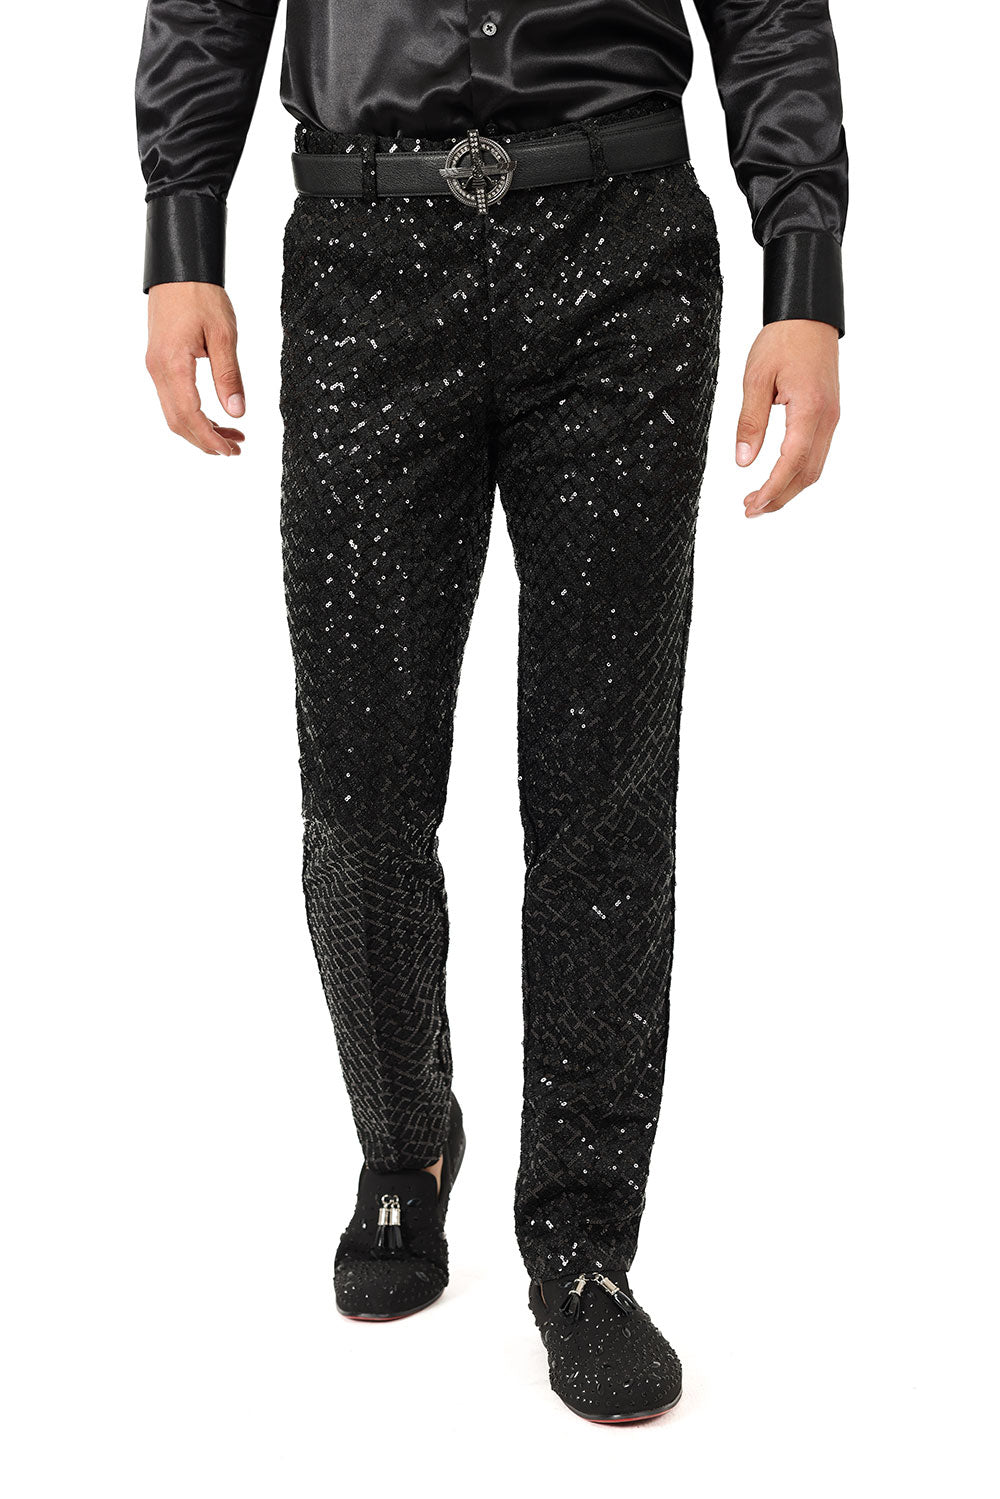 Barabas Men's Sequin Diamond Design Shiny Chino Pants 2CP3099 Black